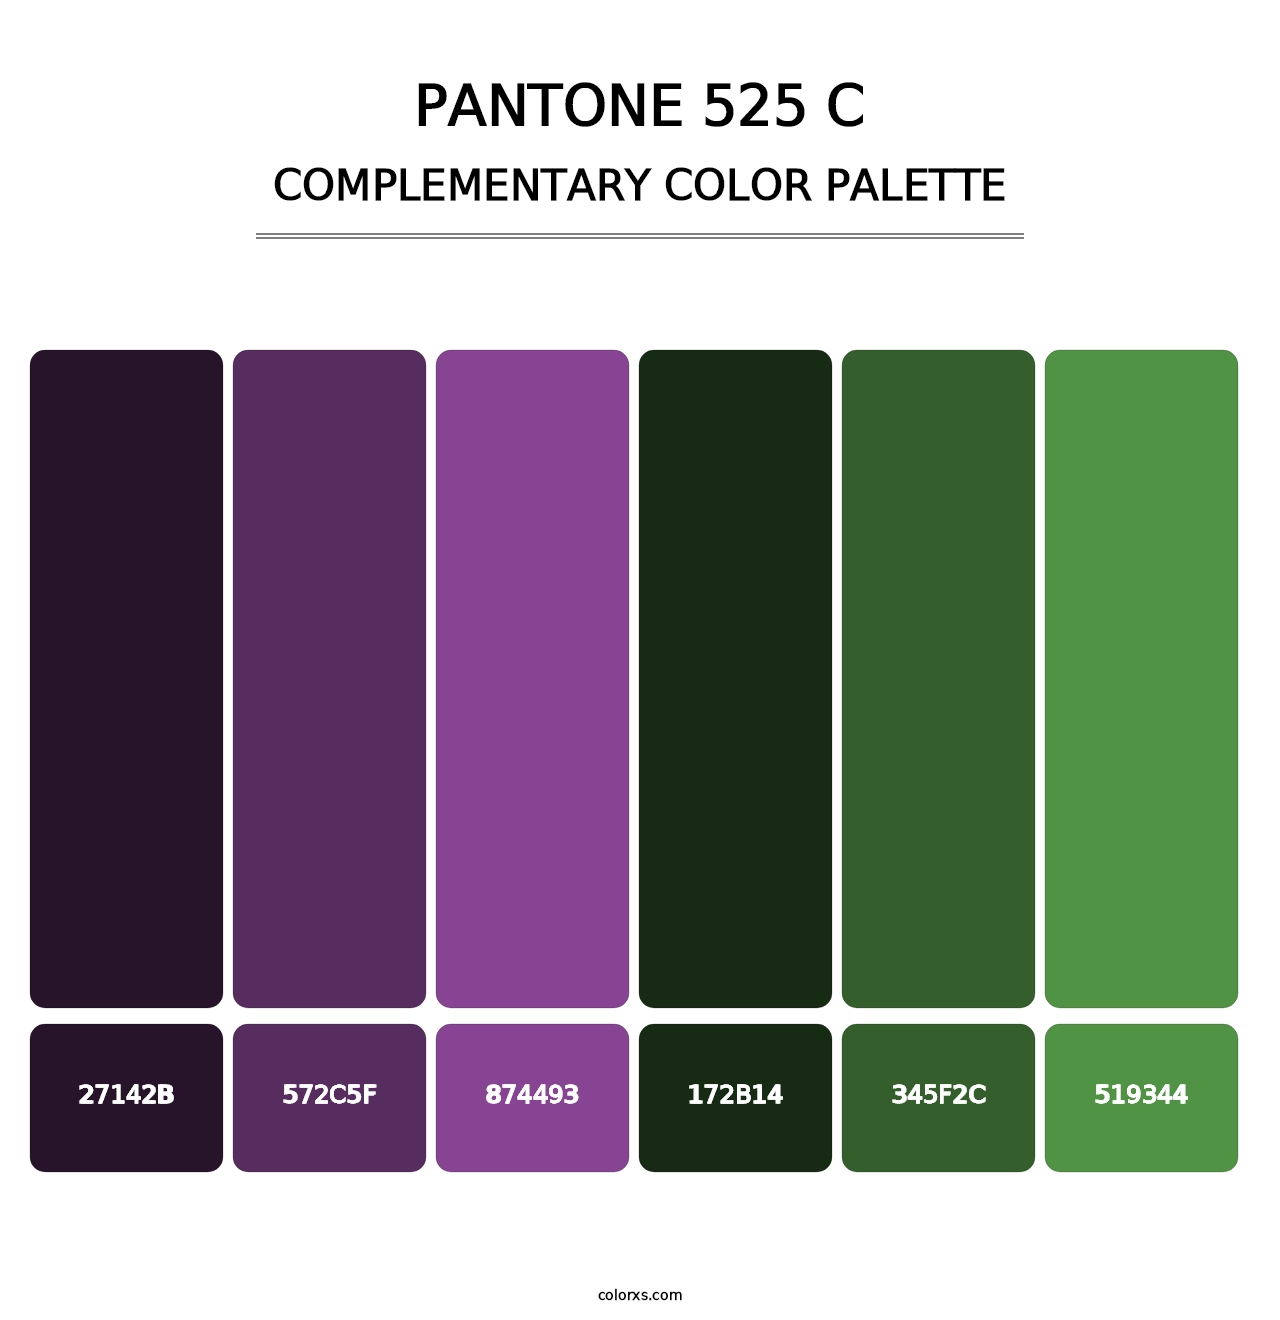 PANTONE 525 C - Complementary Color Palette